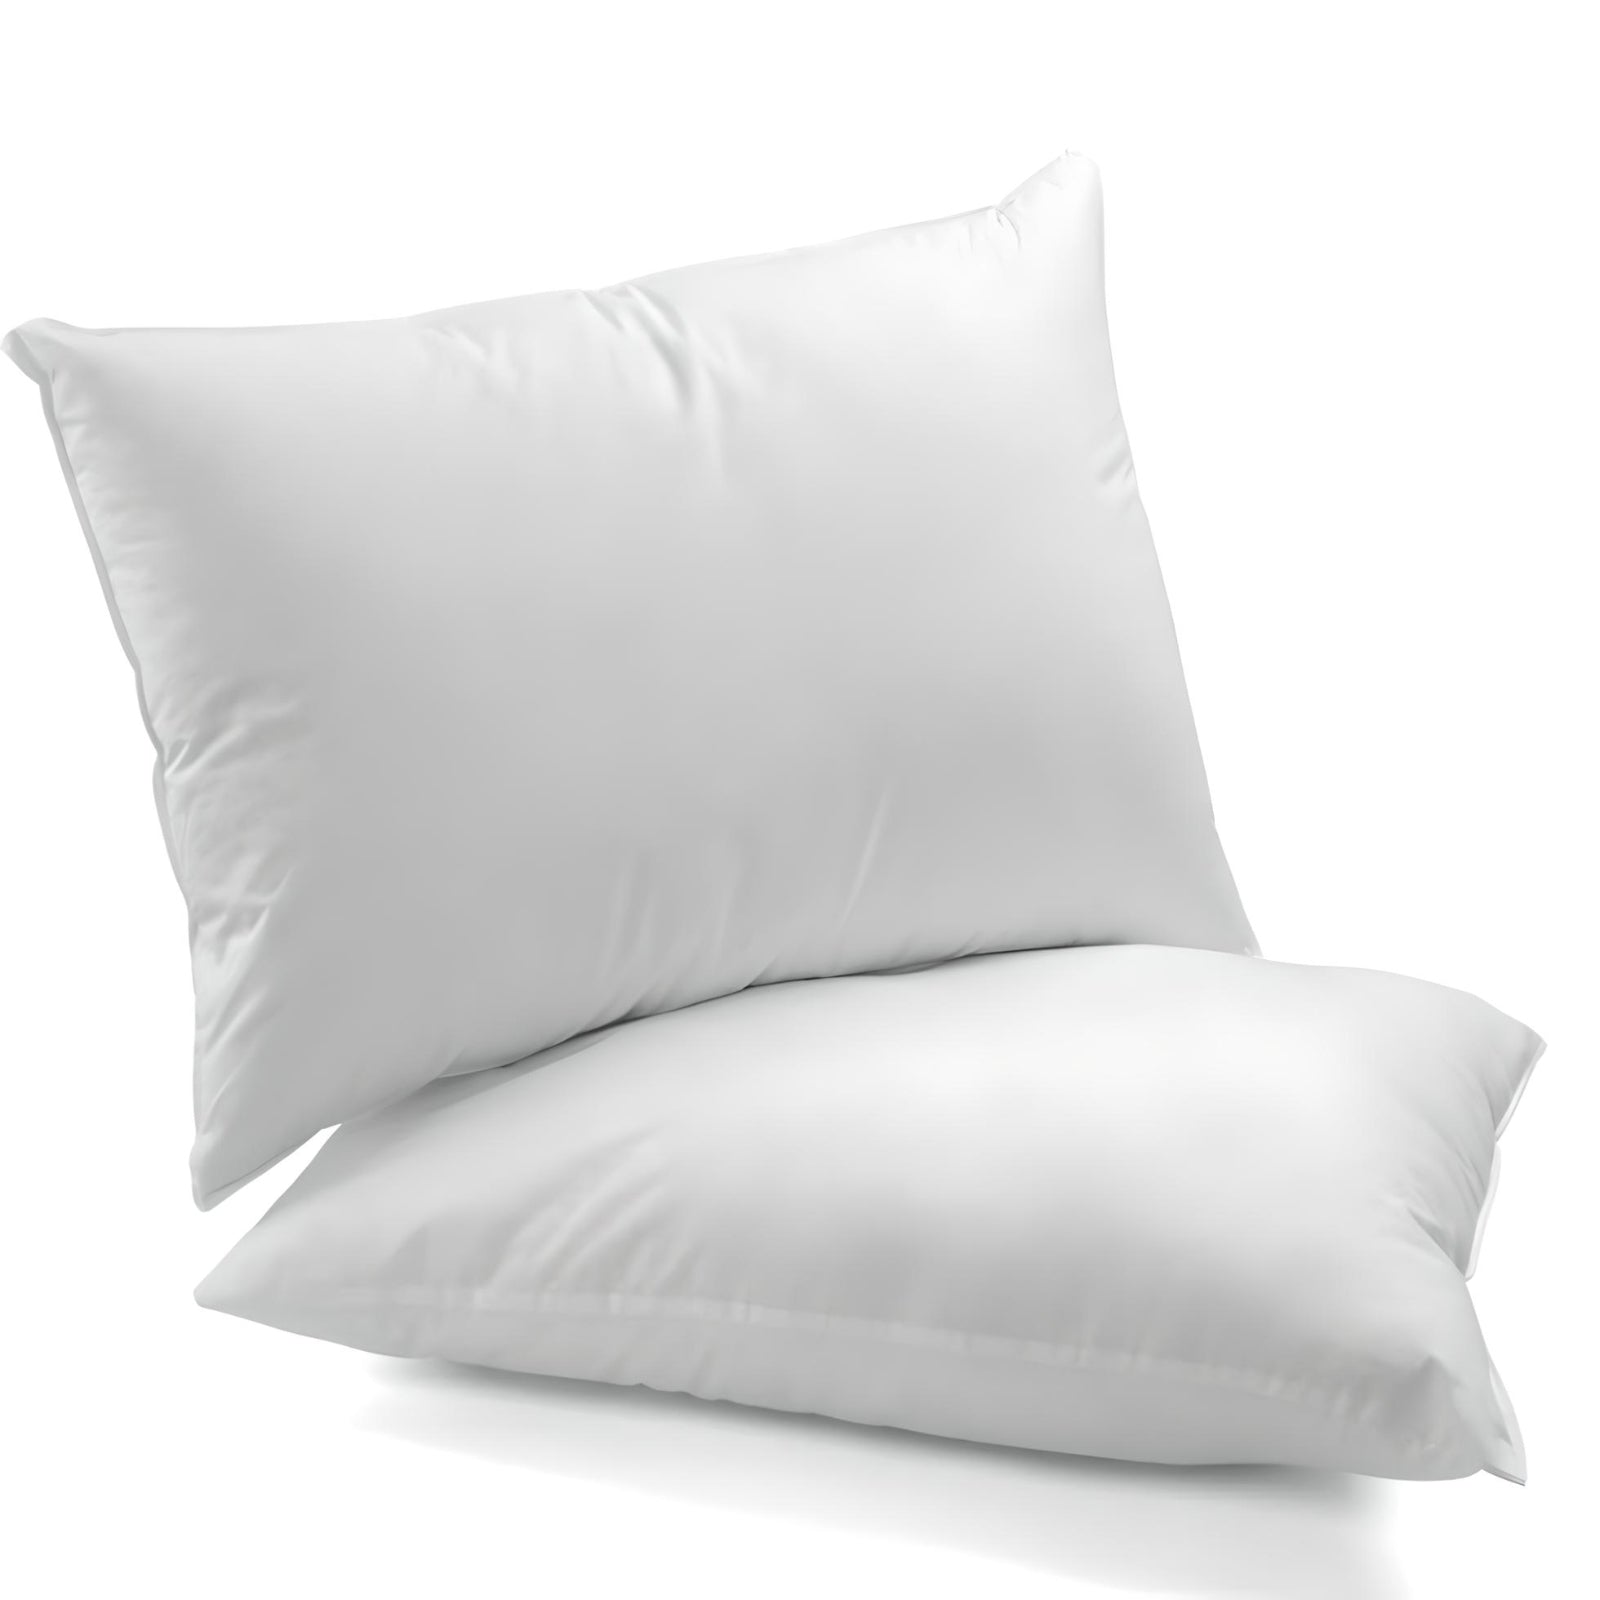 natural fibre luxury pillows melbourne